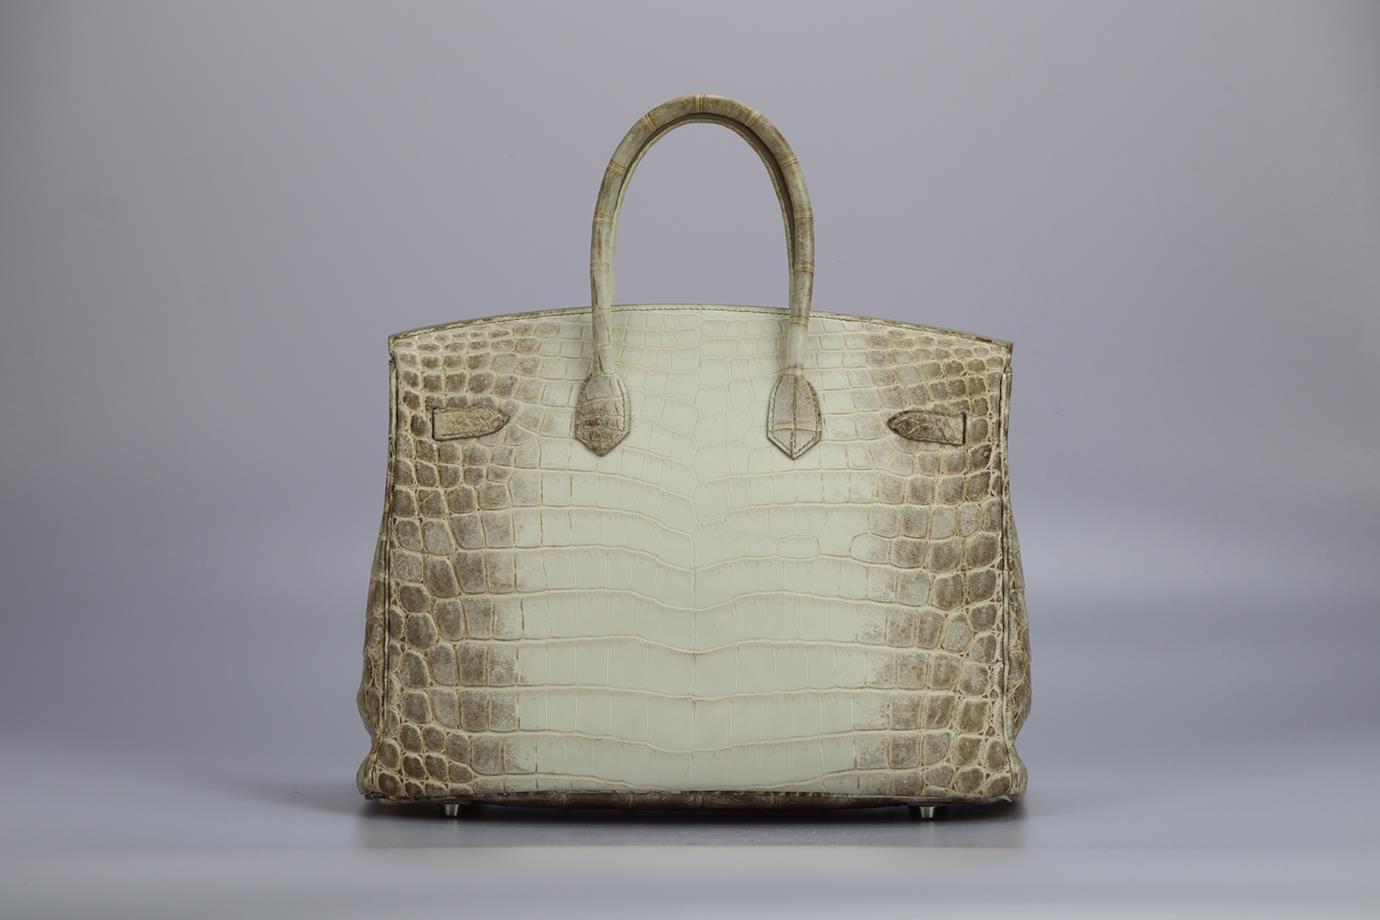 Hermès 2011 Birkin 35cm Himalayan Matte Niloticus Crocodile Bag For Sale 2